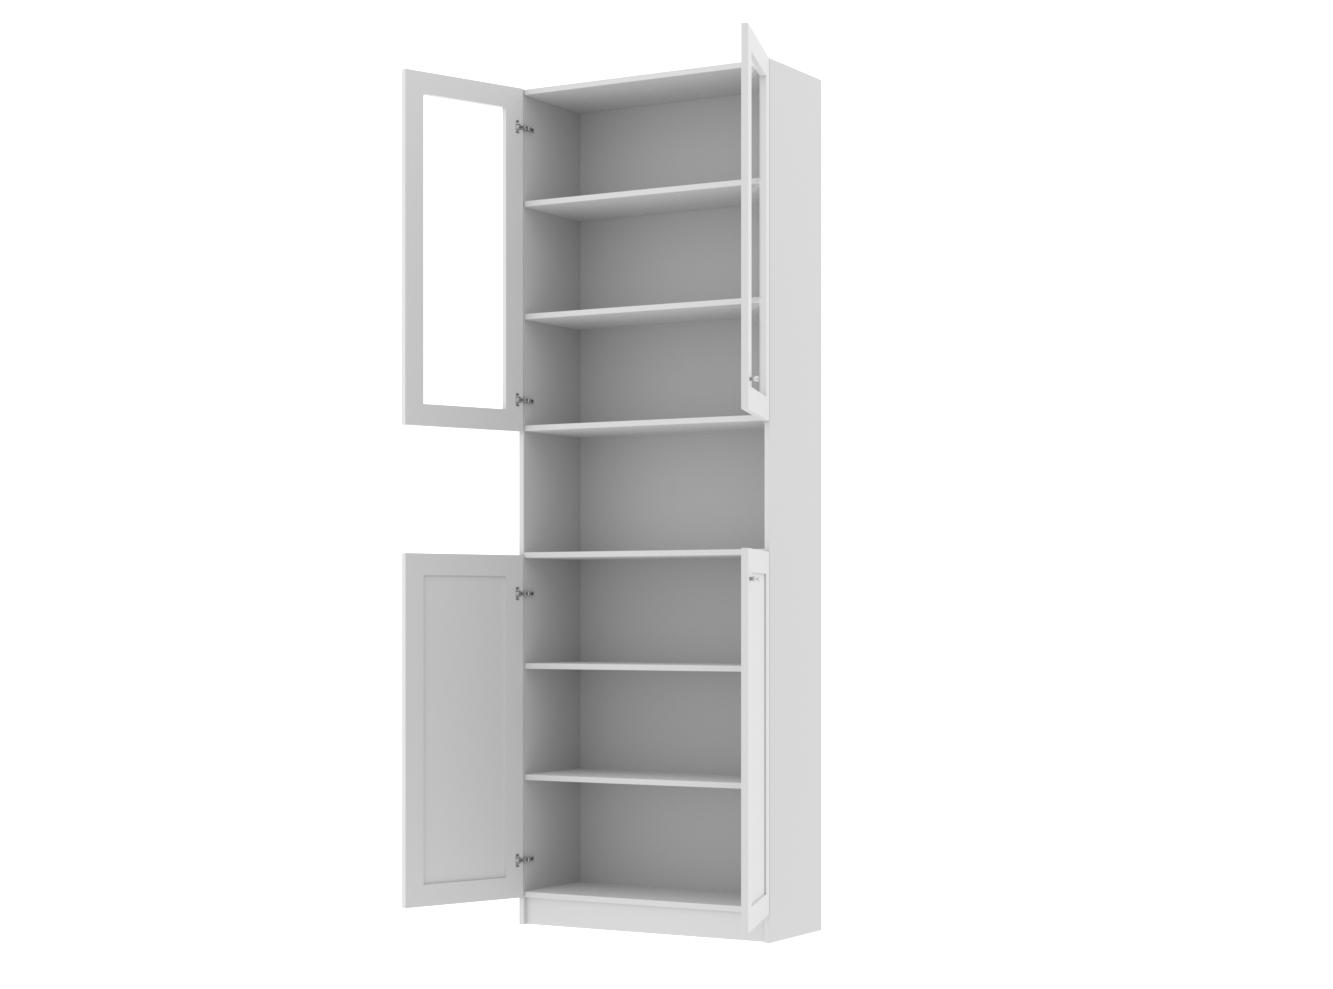  Книжный шкаф Билли 17 white ИКЕА (IKEA) изображение товара